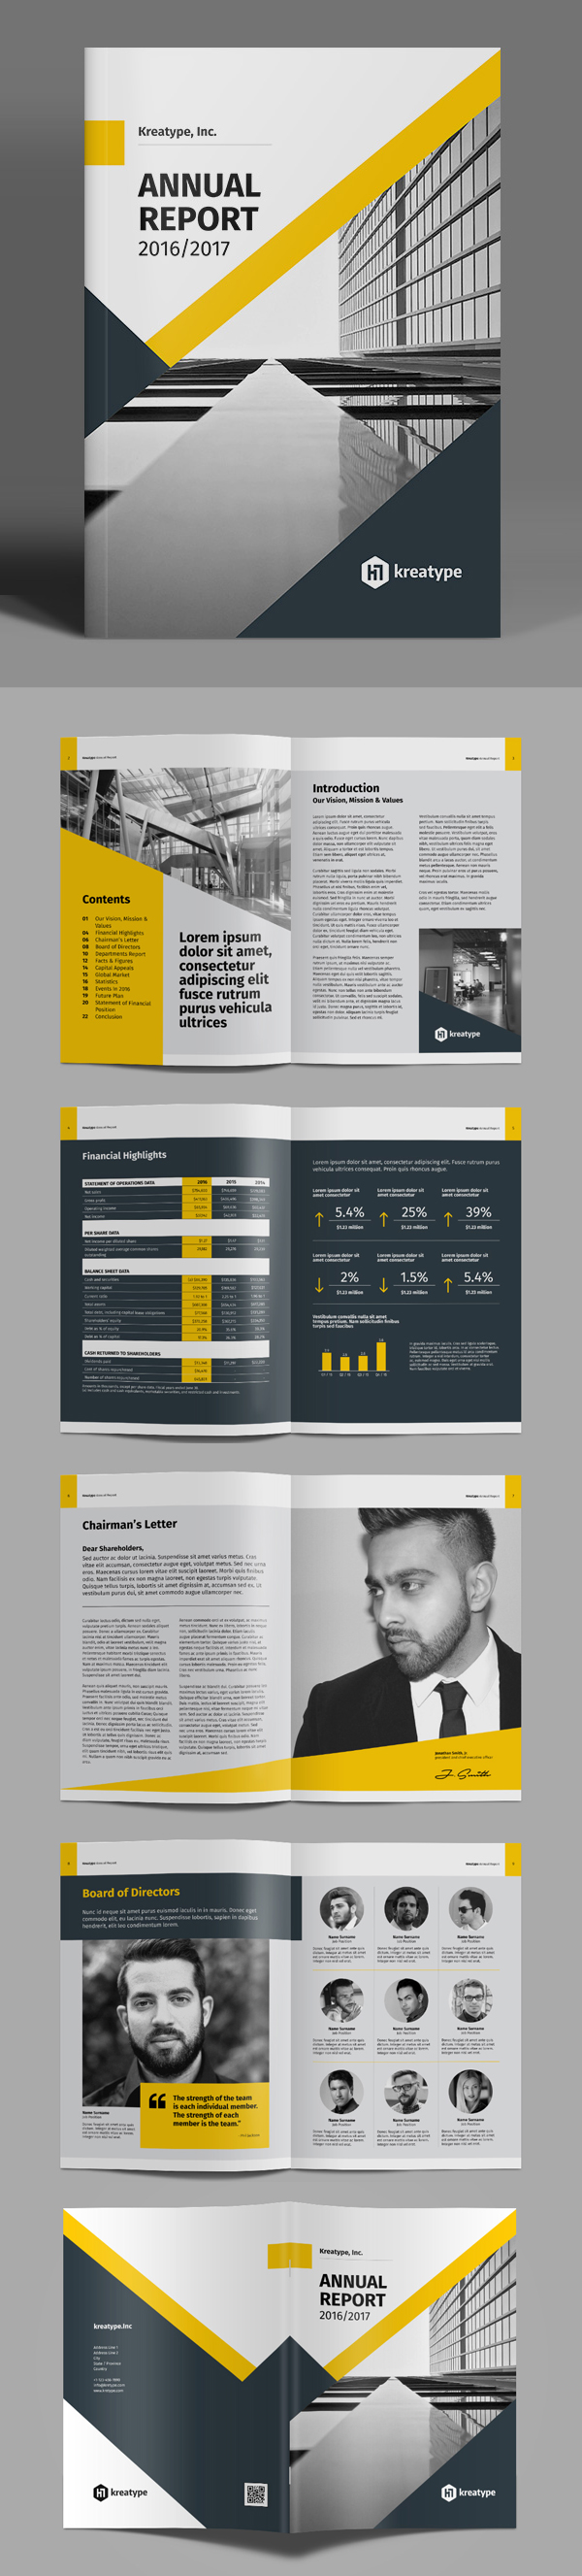 Kreatype Annual Report